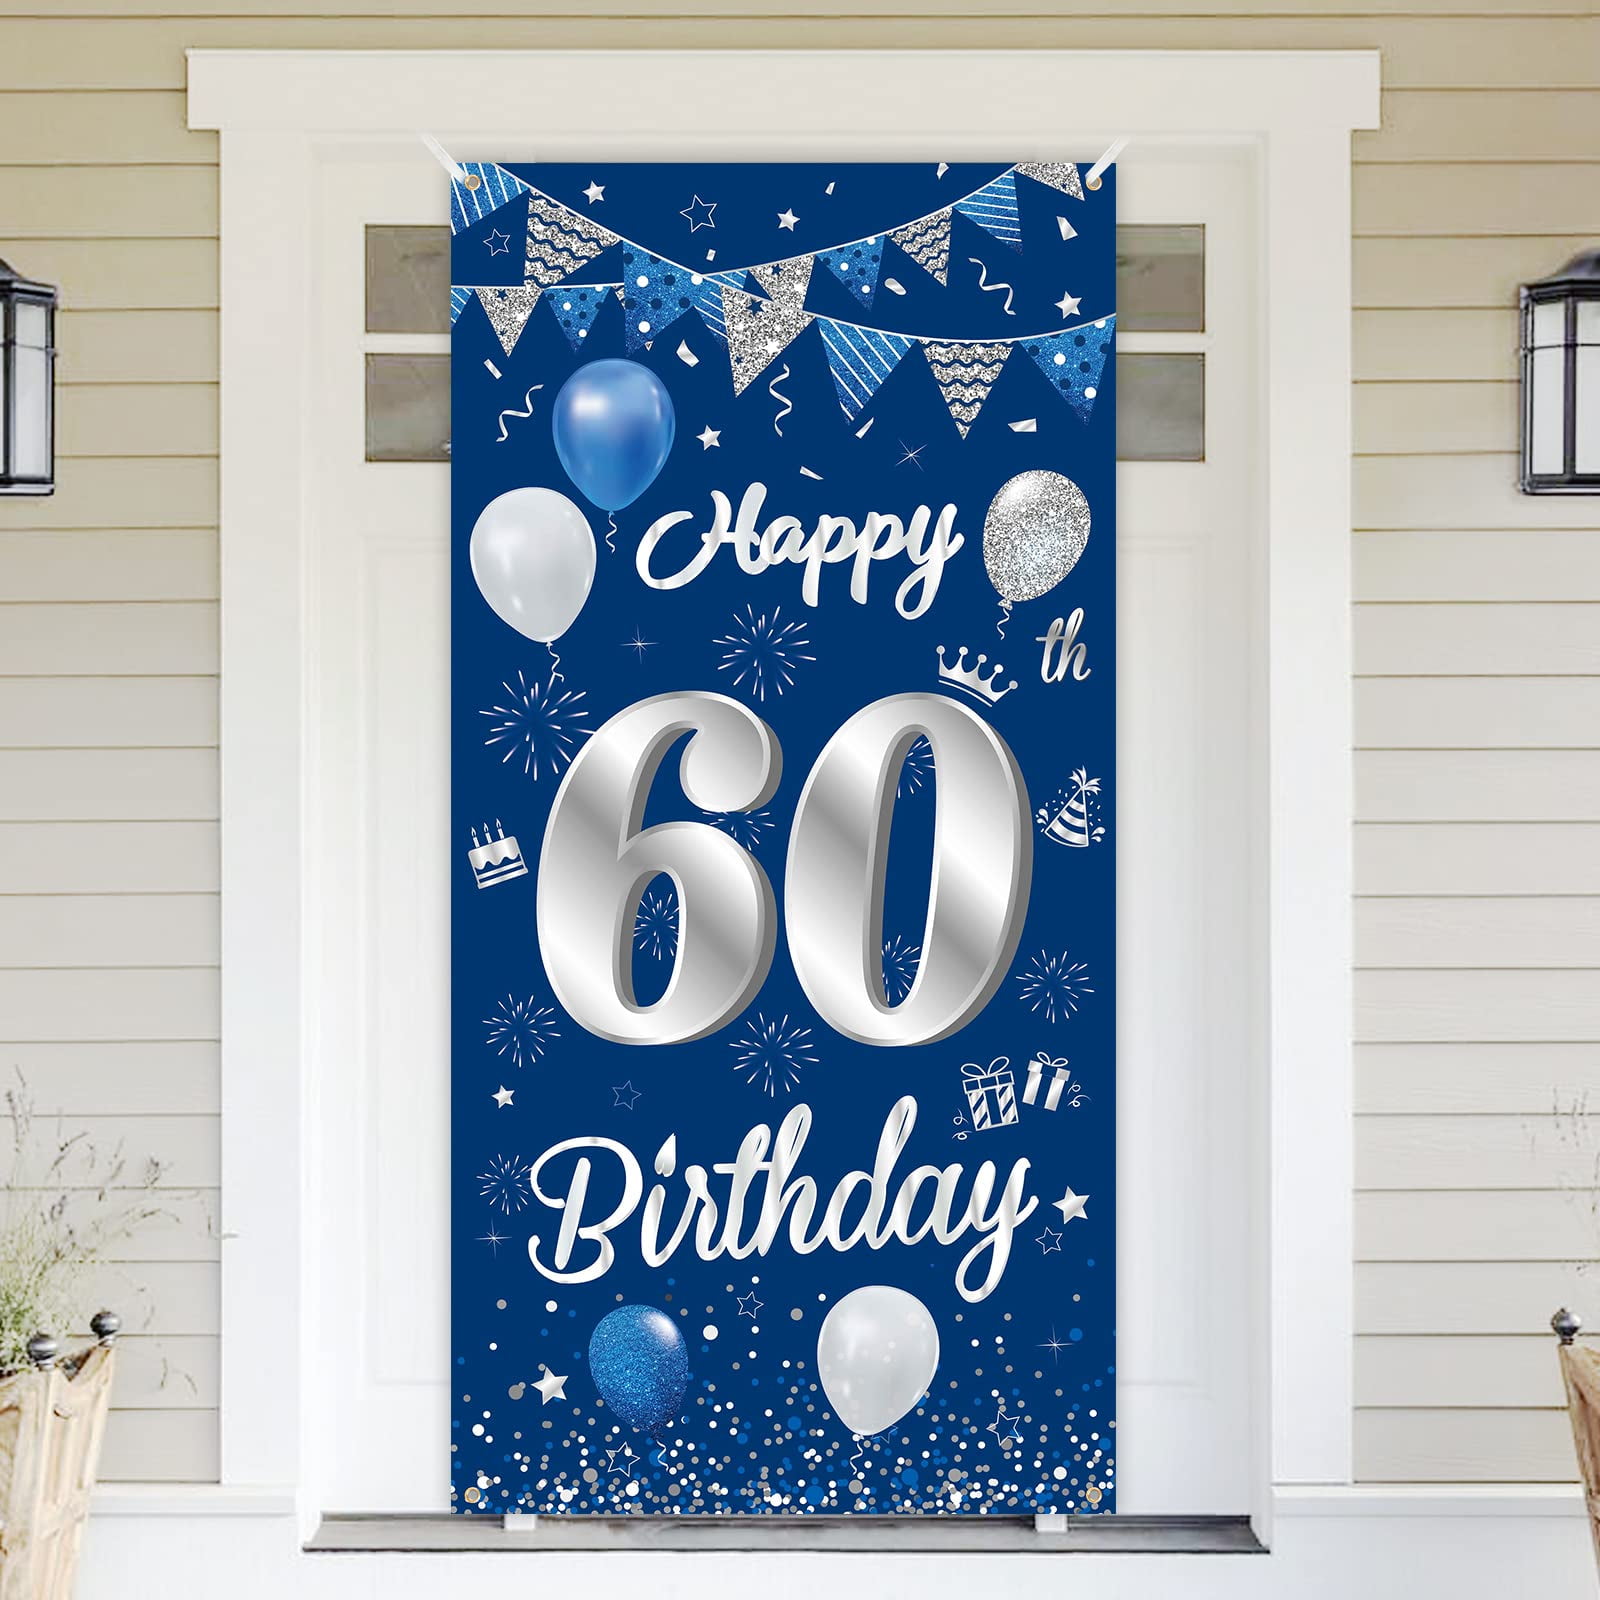 Happy 60th Birthday Door Cover,BTZO Blue Silver Birthday Party Decoration  60th Birthday Background Banner for Men Boys Garden Wall Door  Decoration,185 x 90cm 